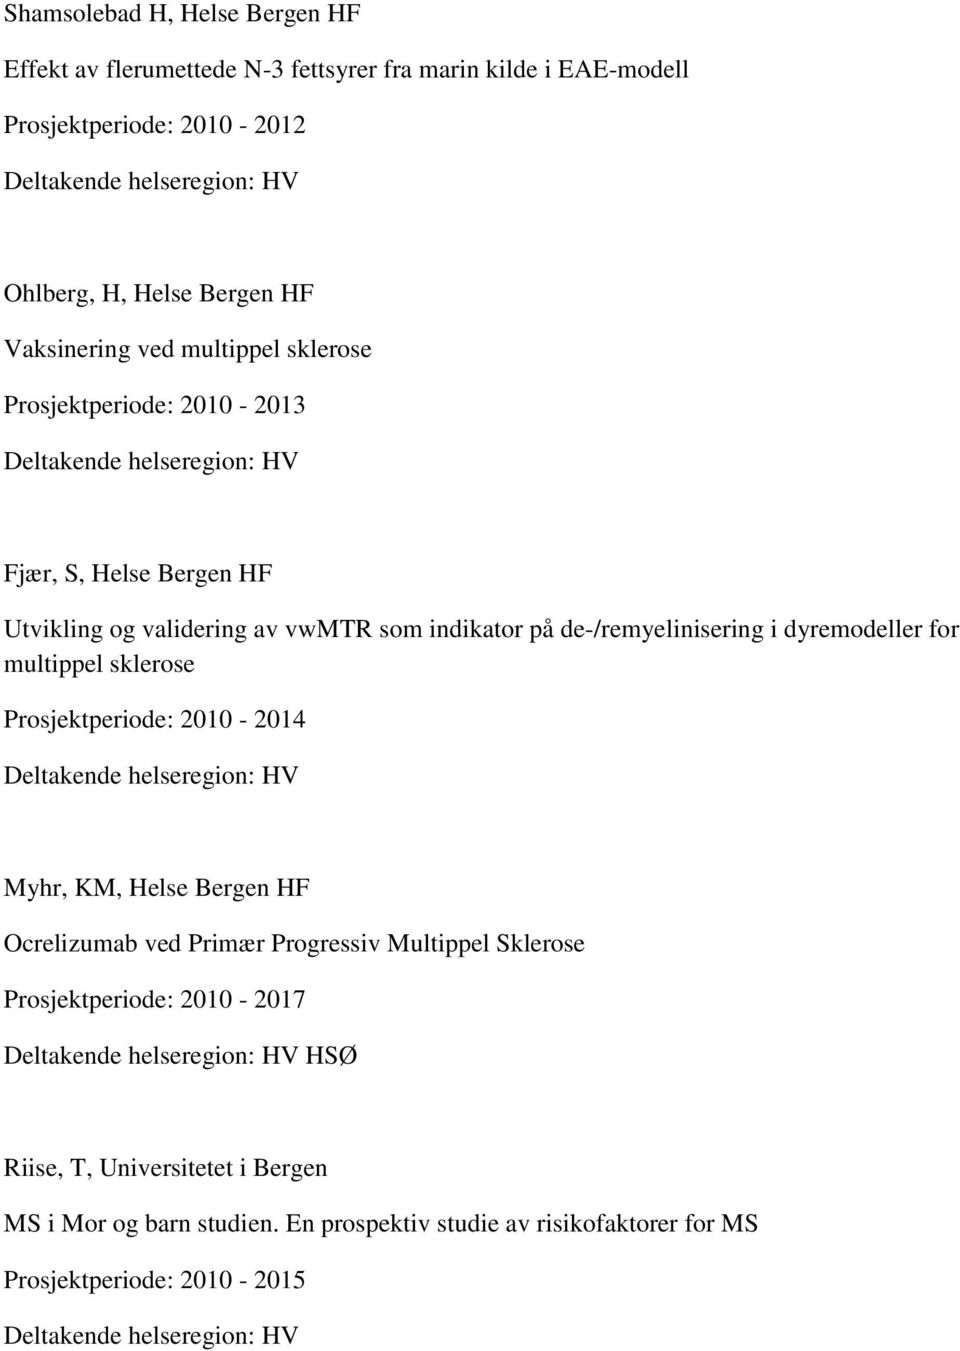 de-/remyelinisering i dyremodeller for multippel sklerose Prosjektperiode: 2010-2014 Myhr, KM, Helse Bergen HF Ocrelizumab ved Primær Progressiv